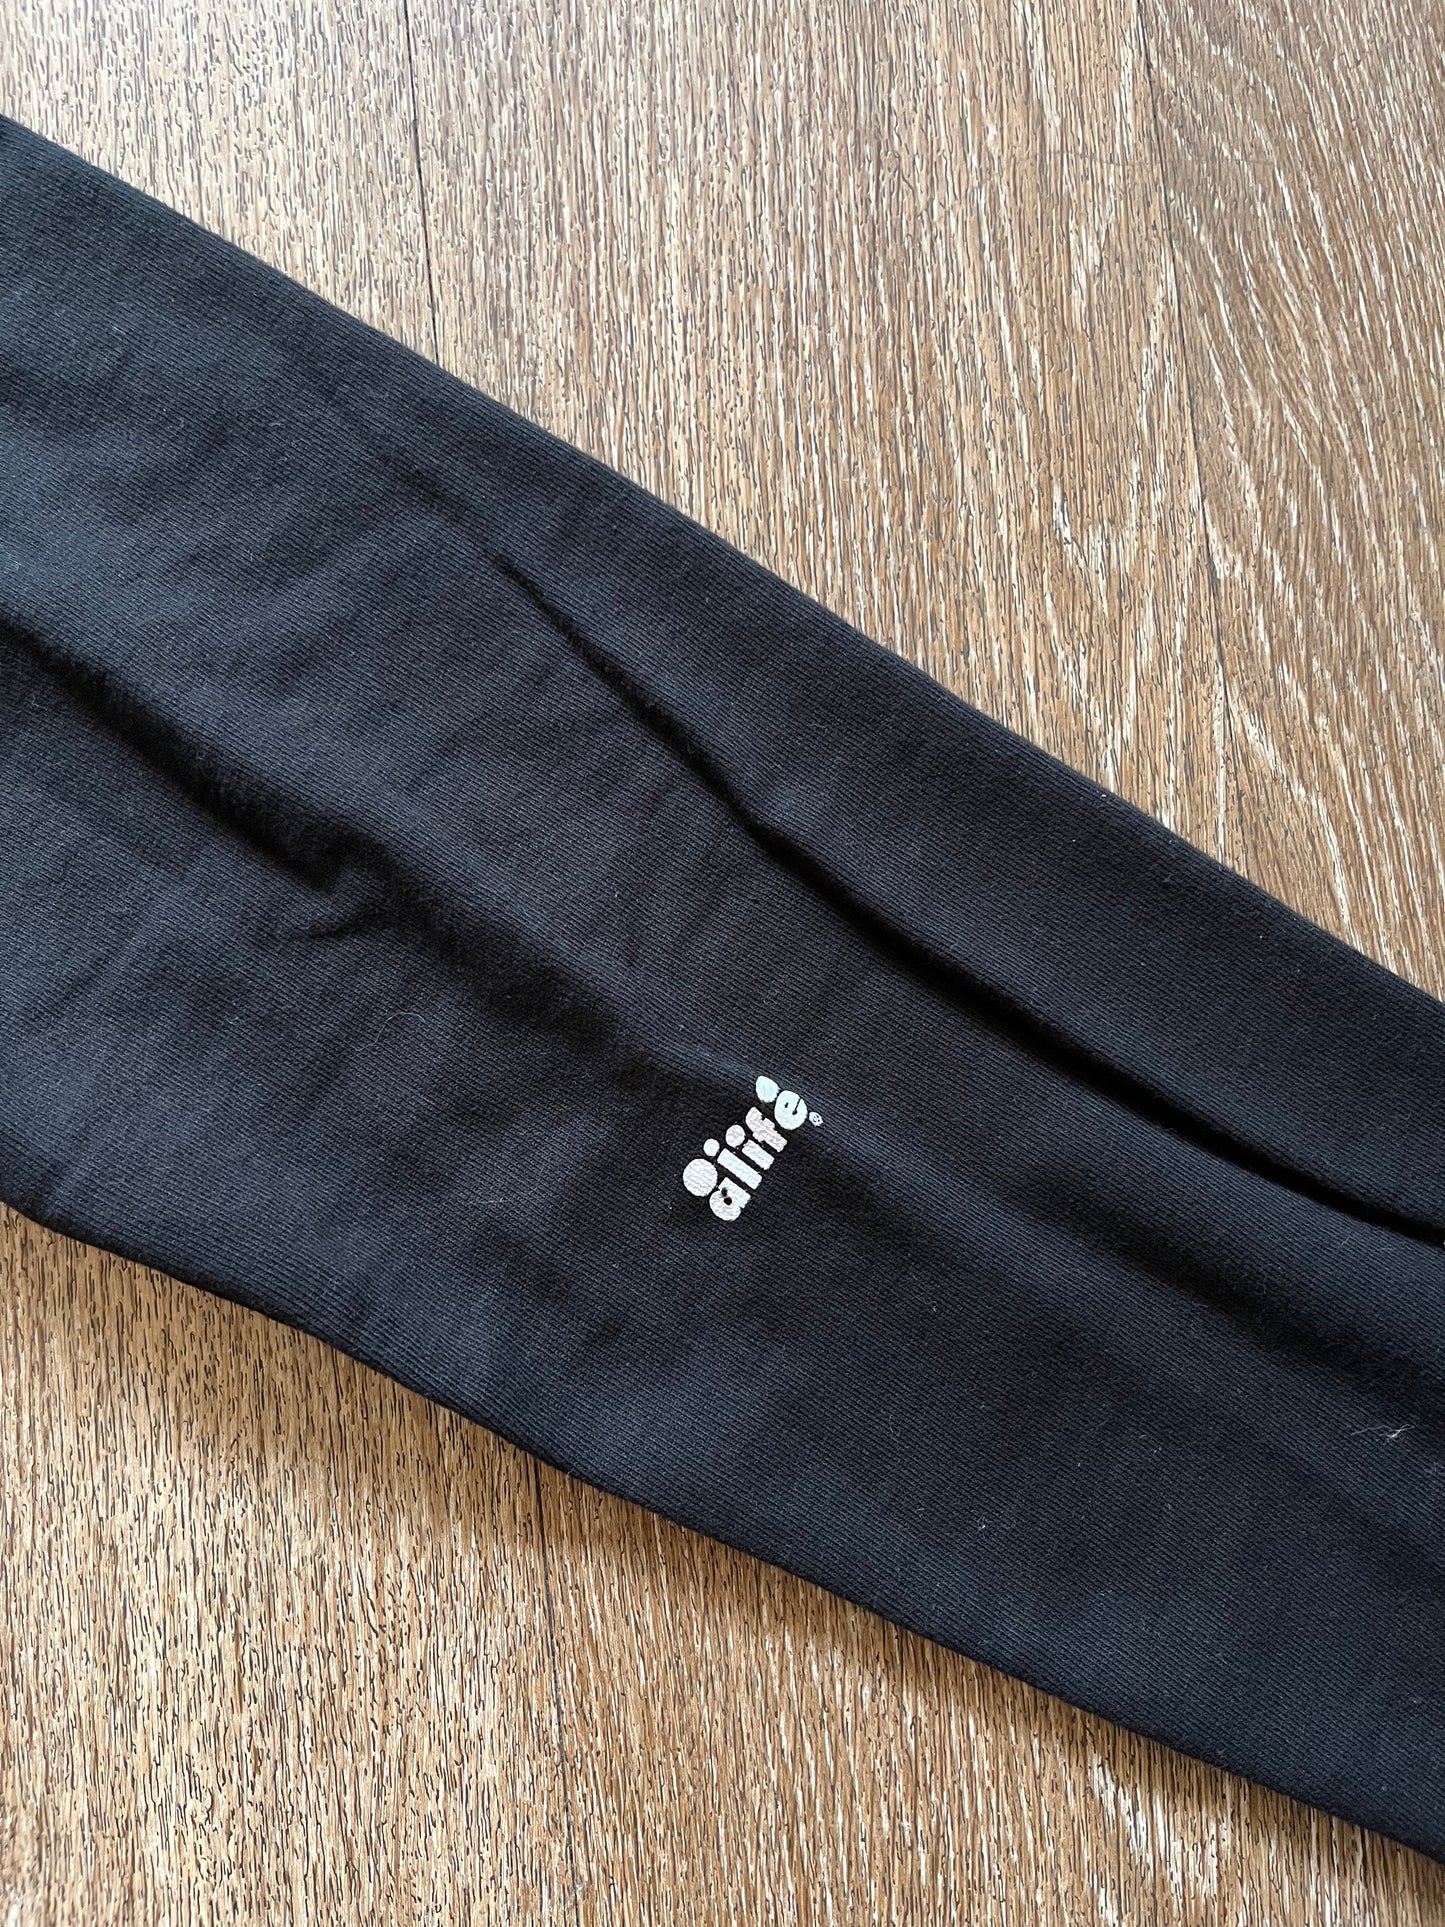 Alife men's logo black crewneck sweatshirt new with tags, XXL